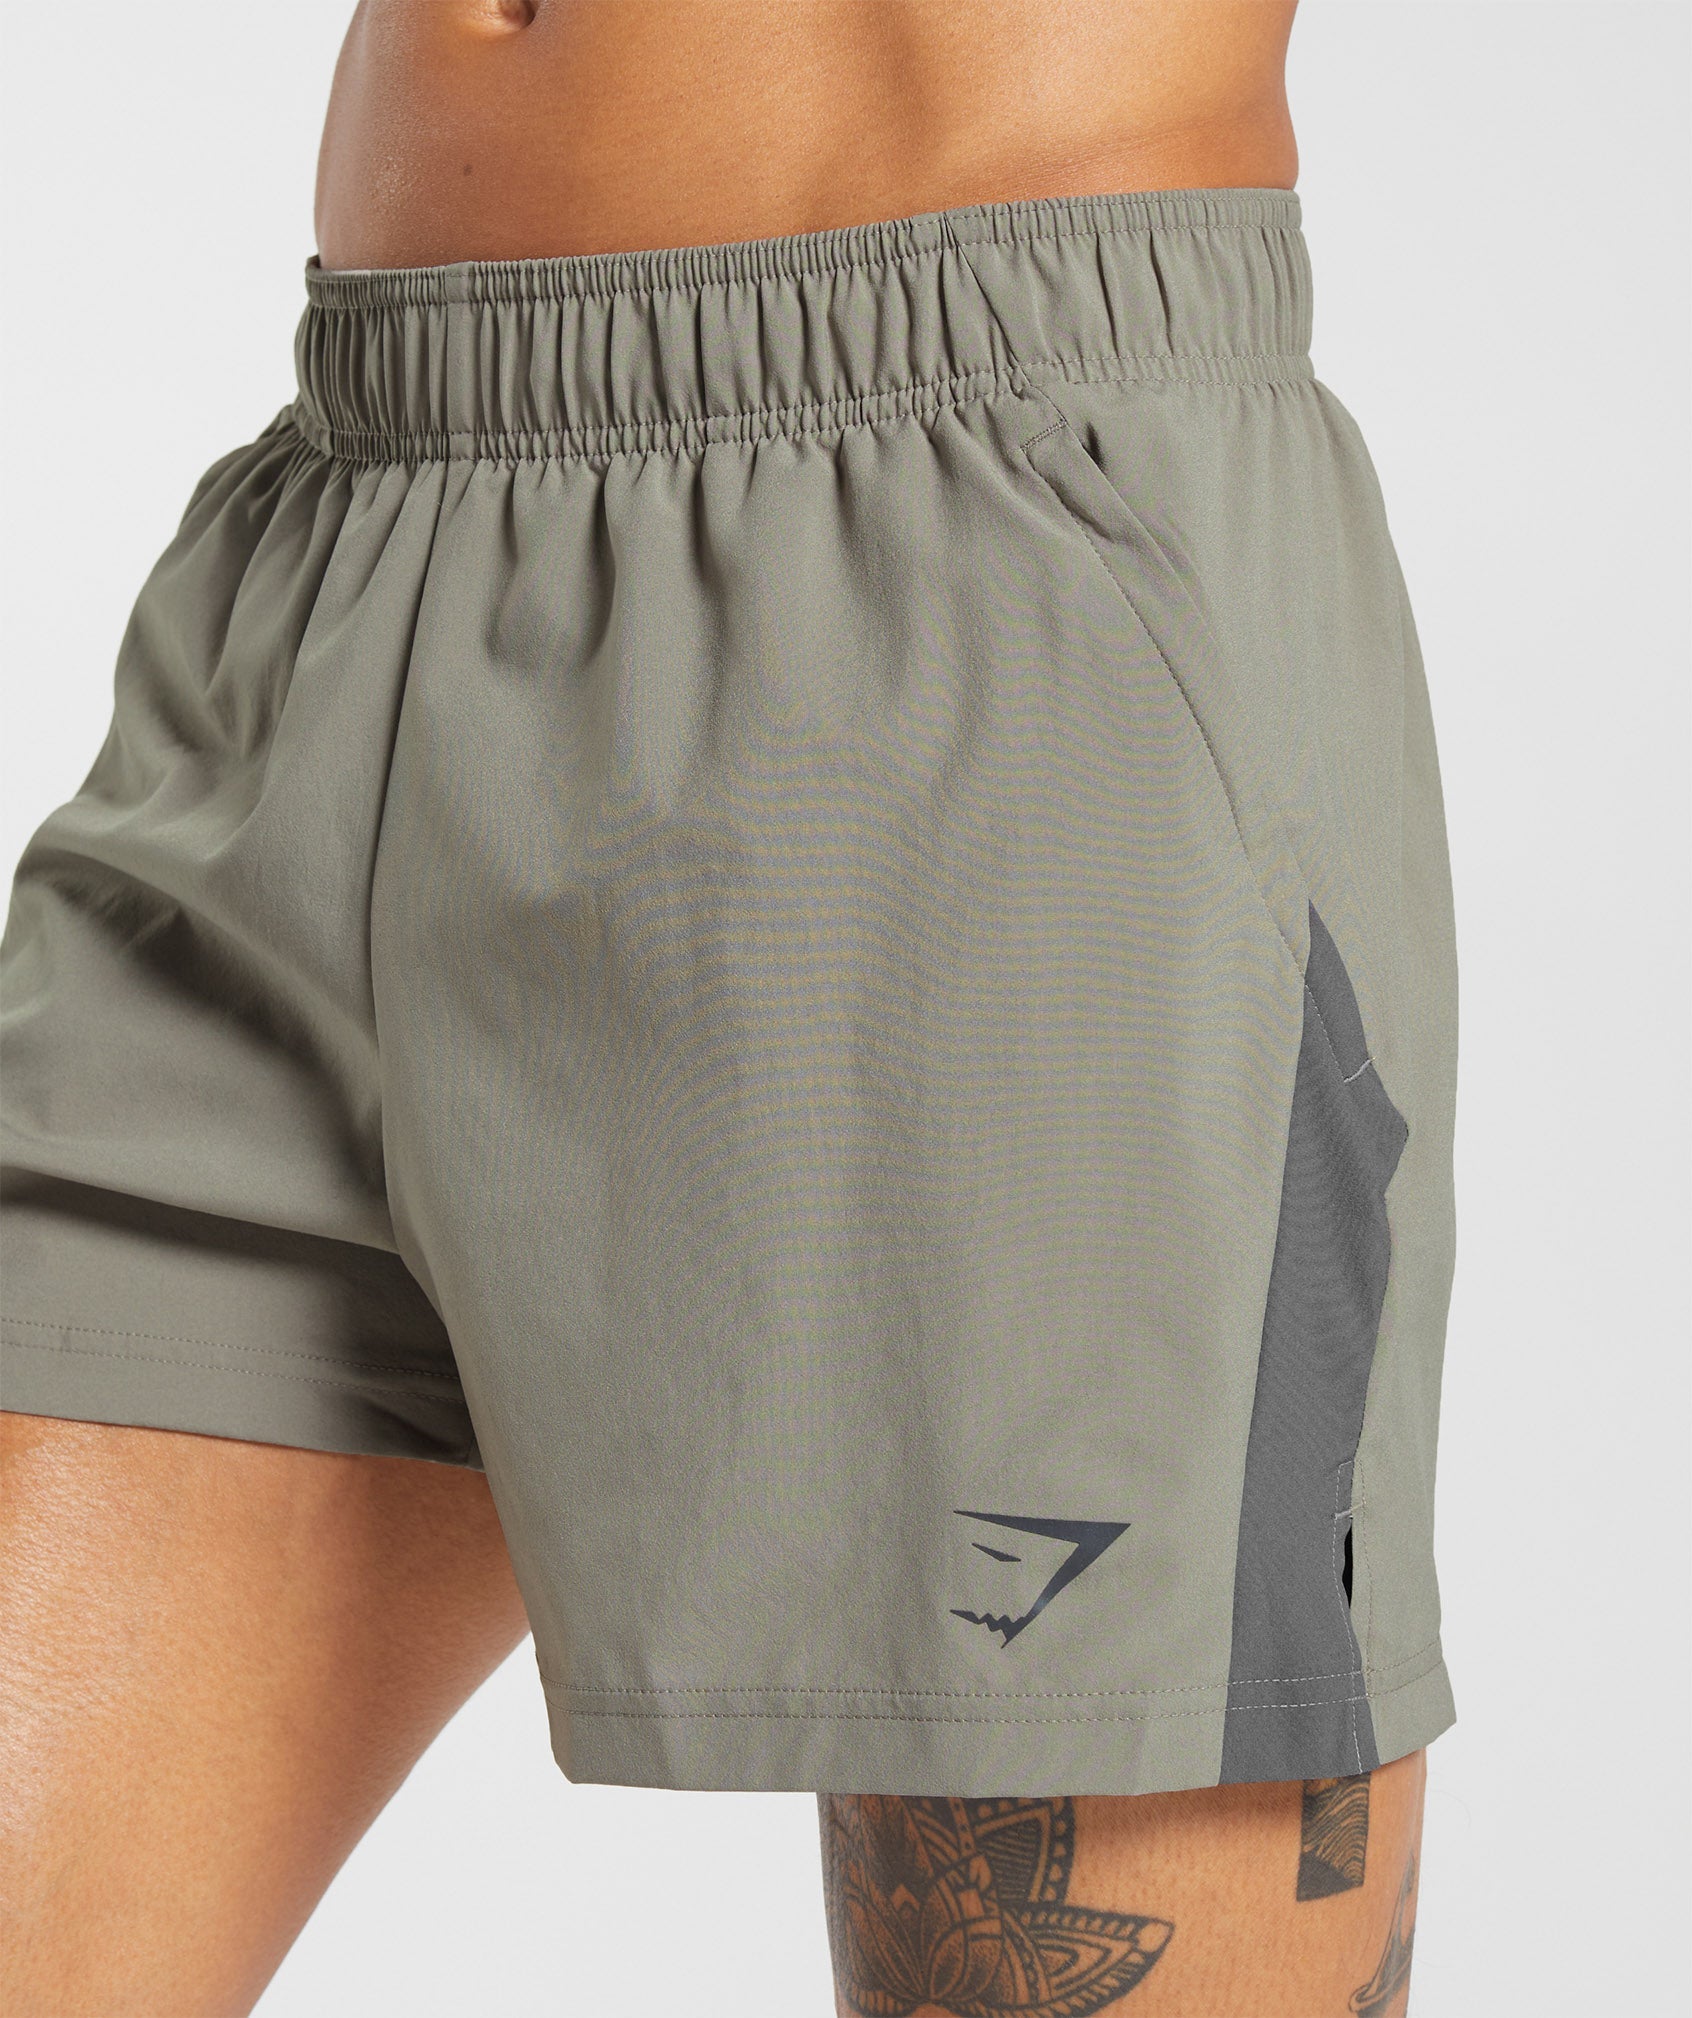 Sport 5" Shorts in Linen Brown/Dark Grey - view 5